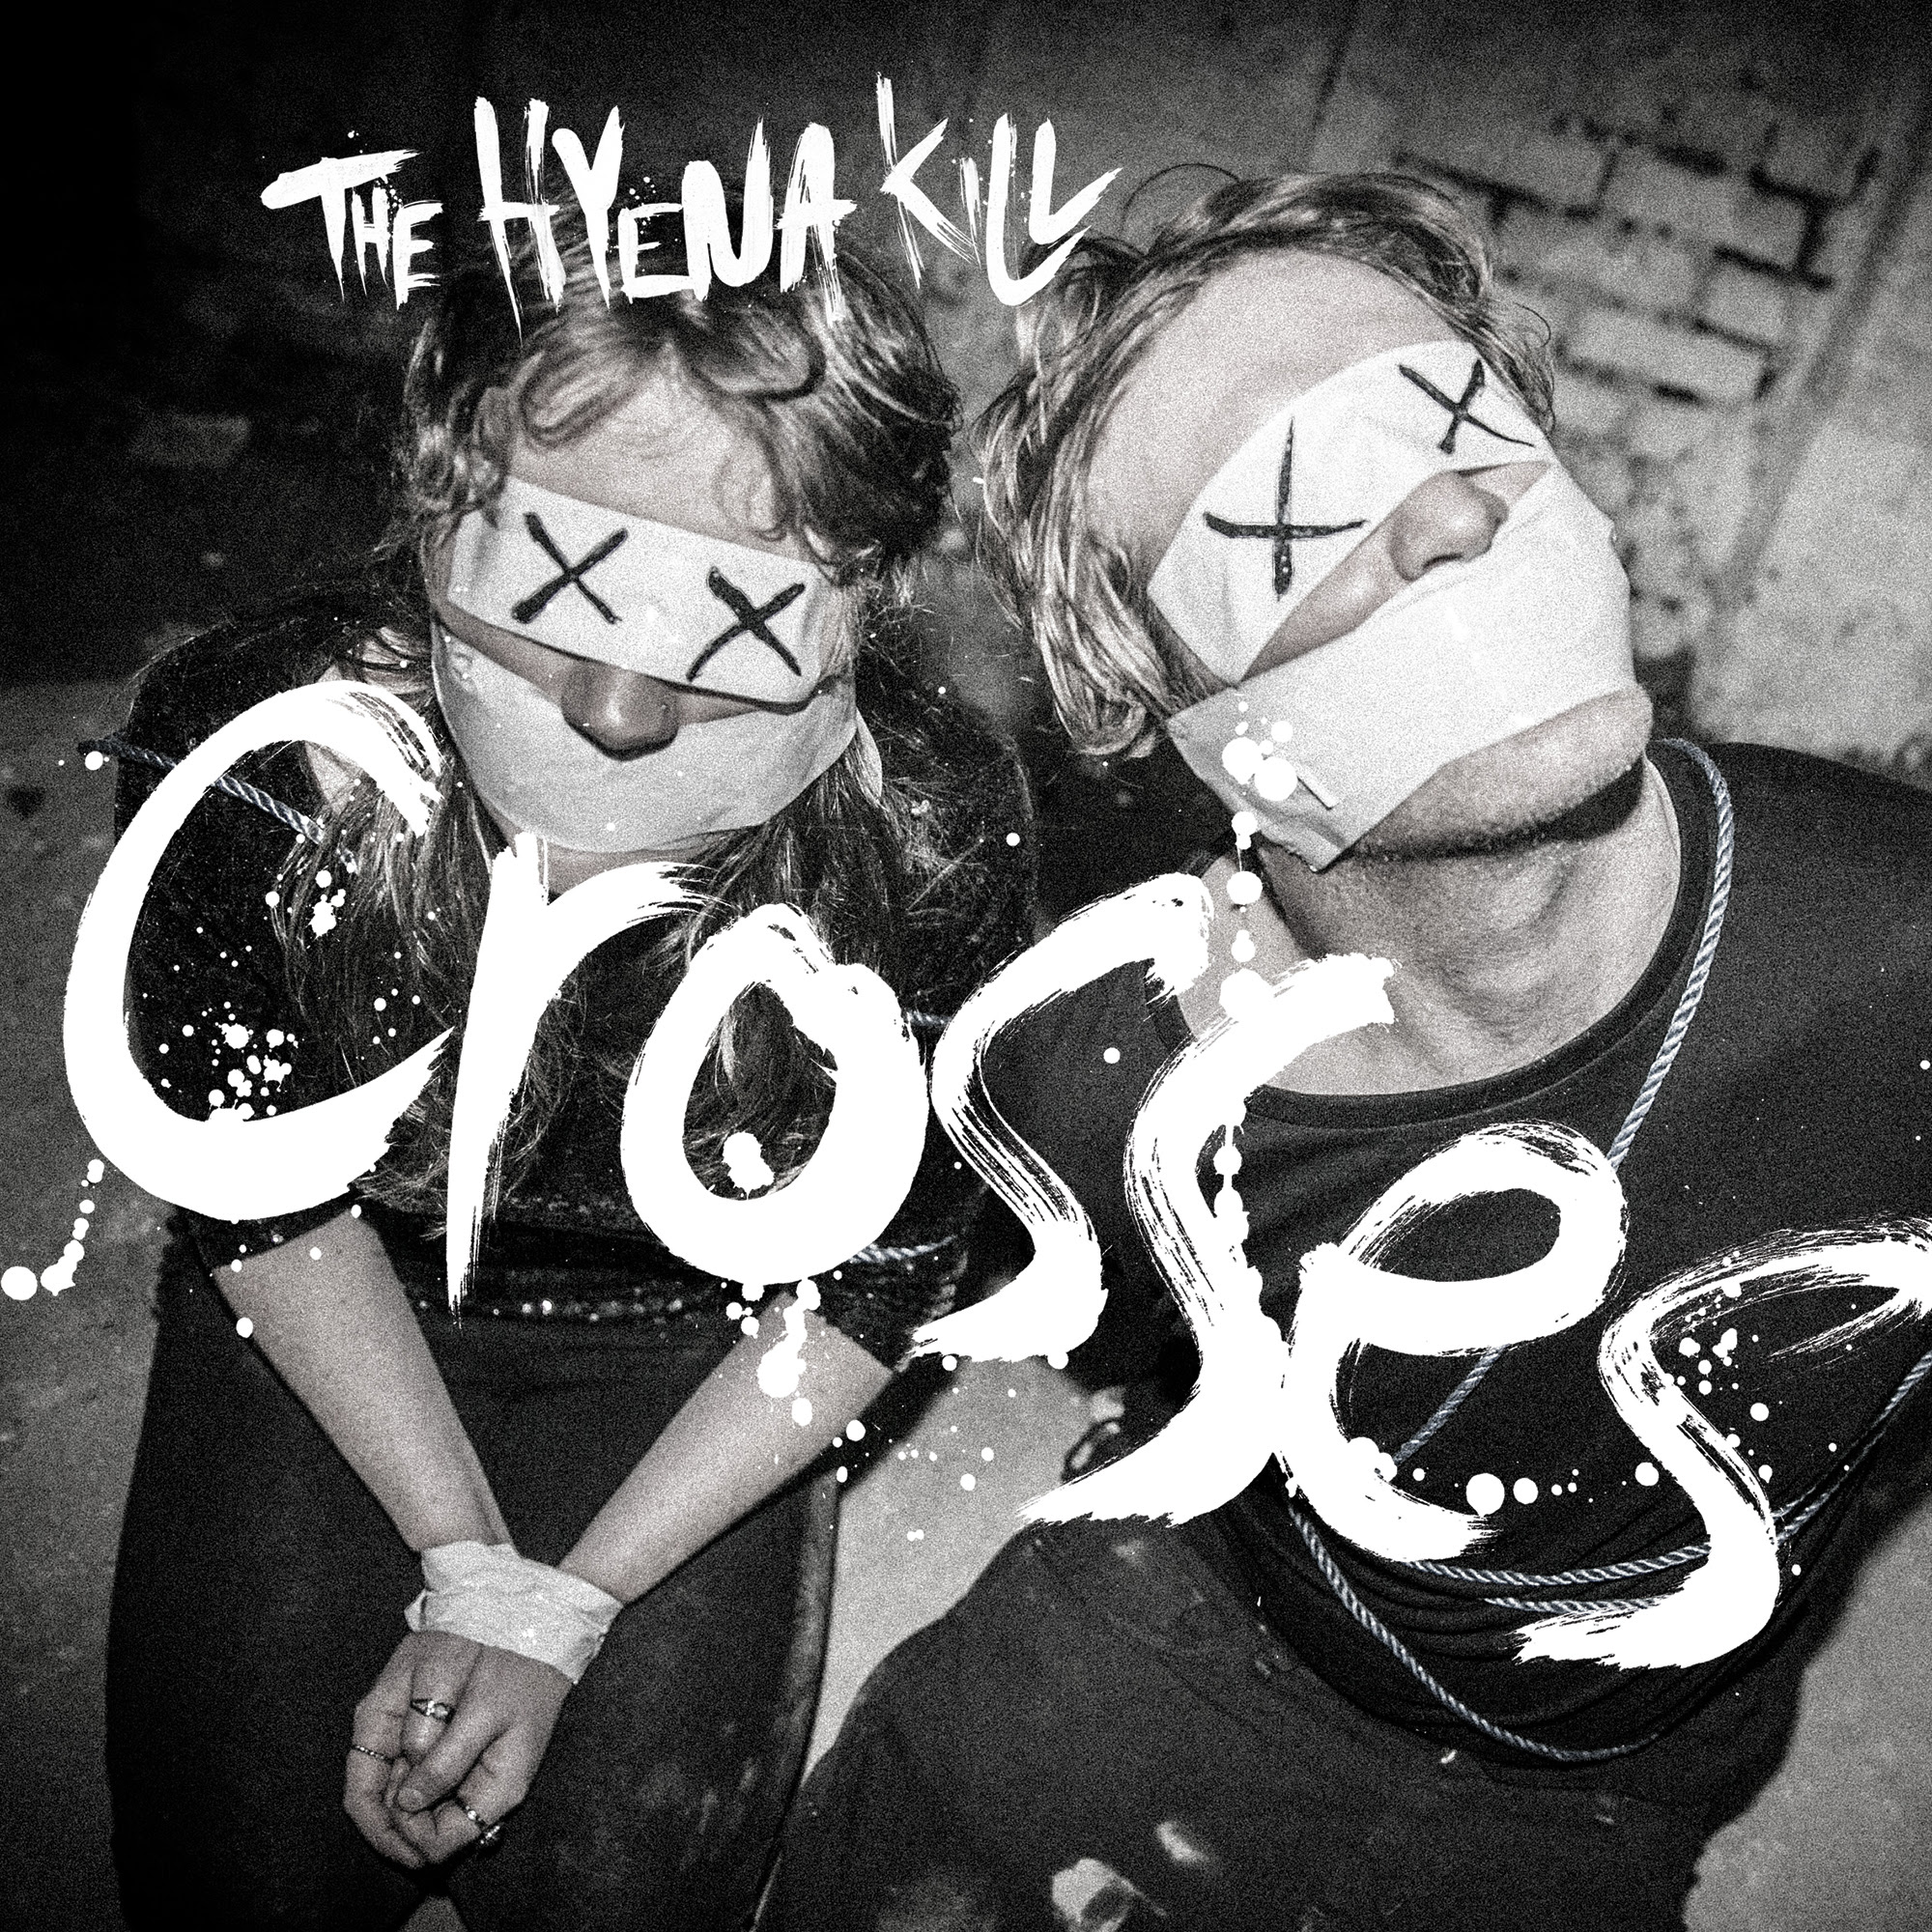 Manchester based The Hyena Kill release new single ‘Crosses’